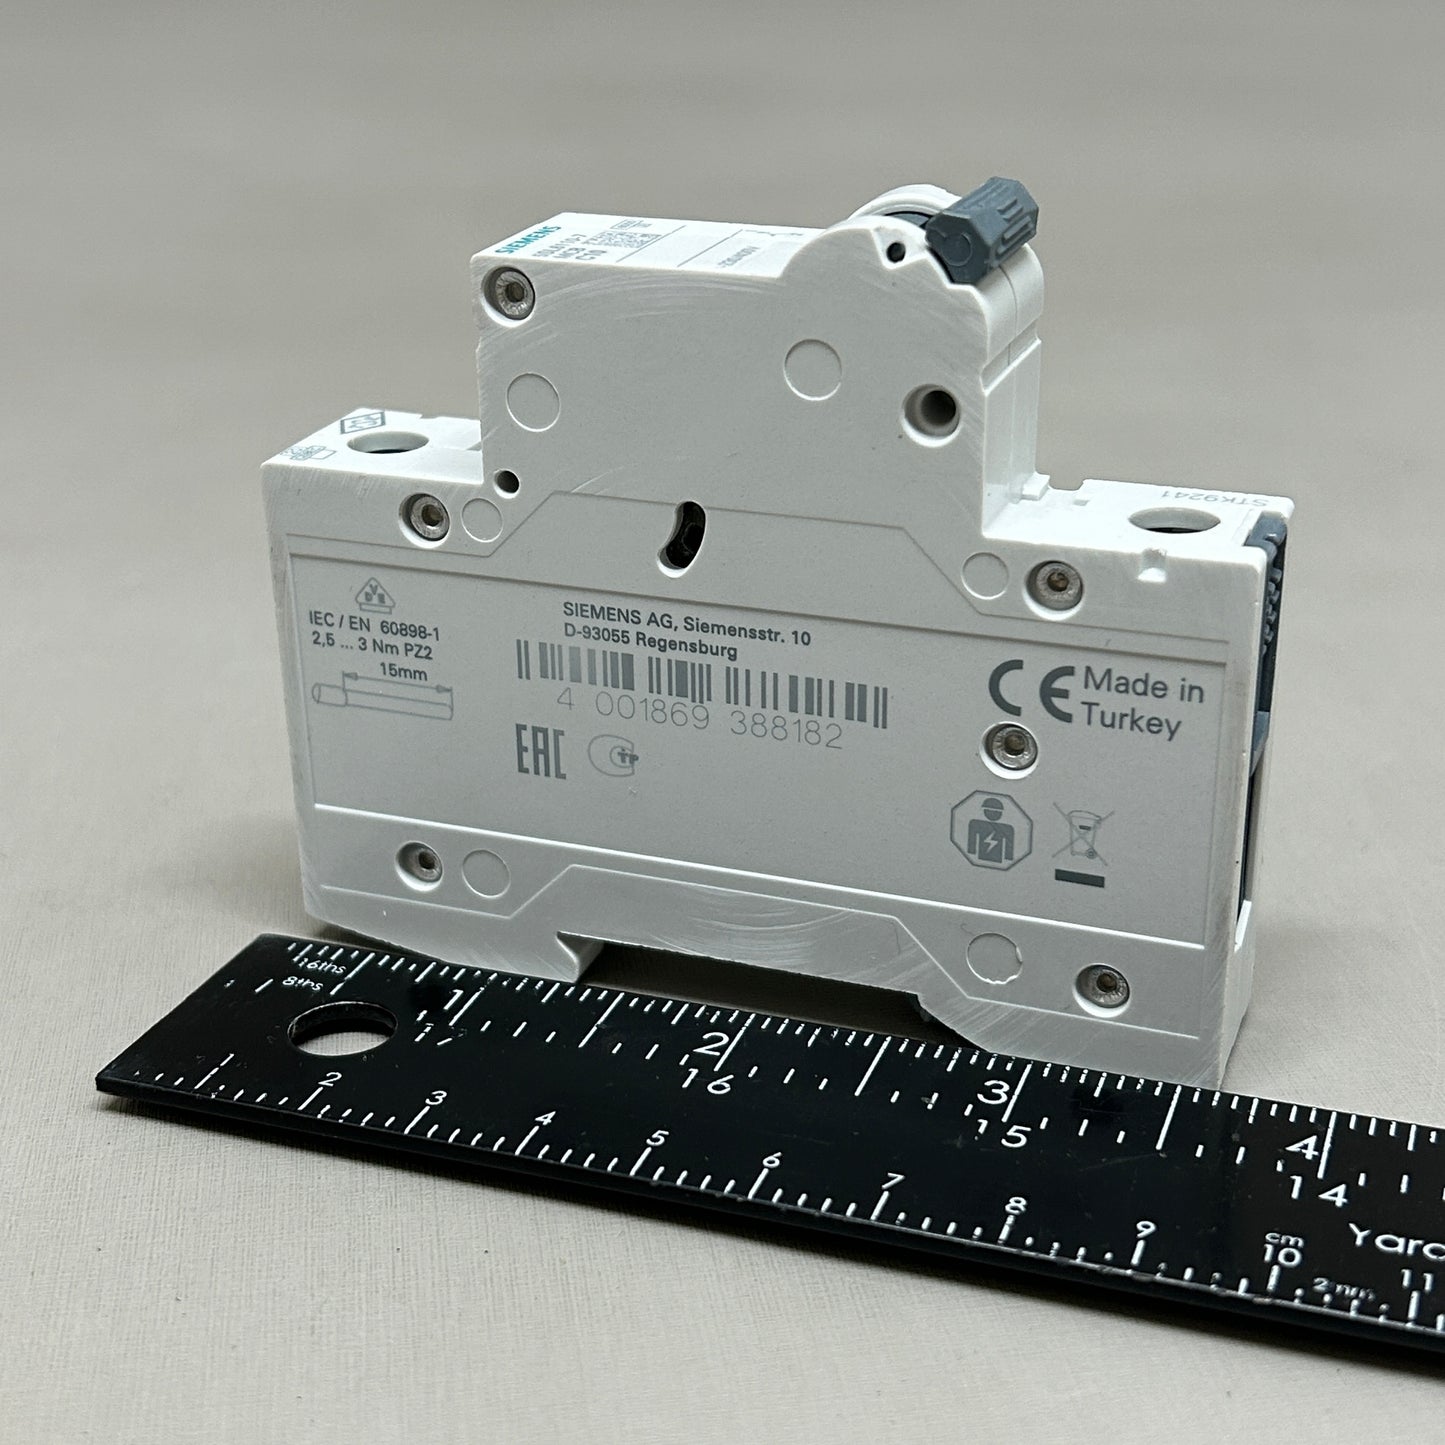 SIEMENS Miniature Circuit Breaker 230/400 V 6kA Off-White 5SL6110-7 (New)